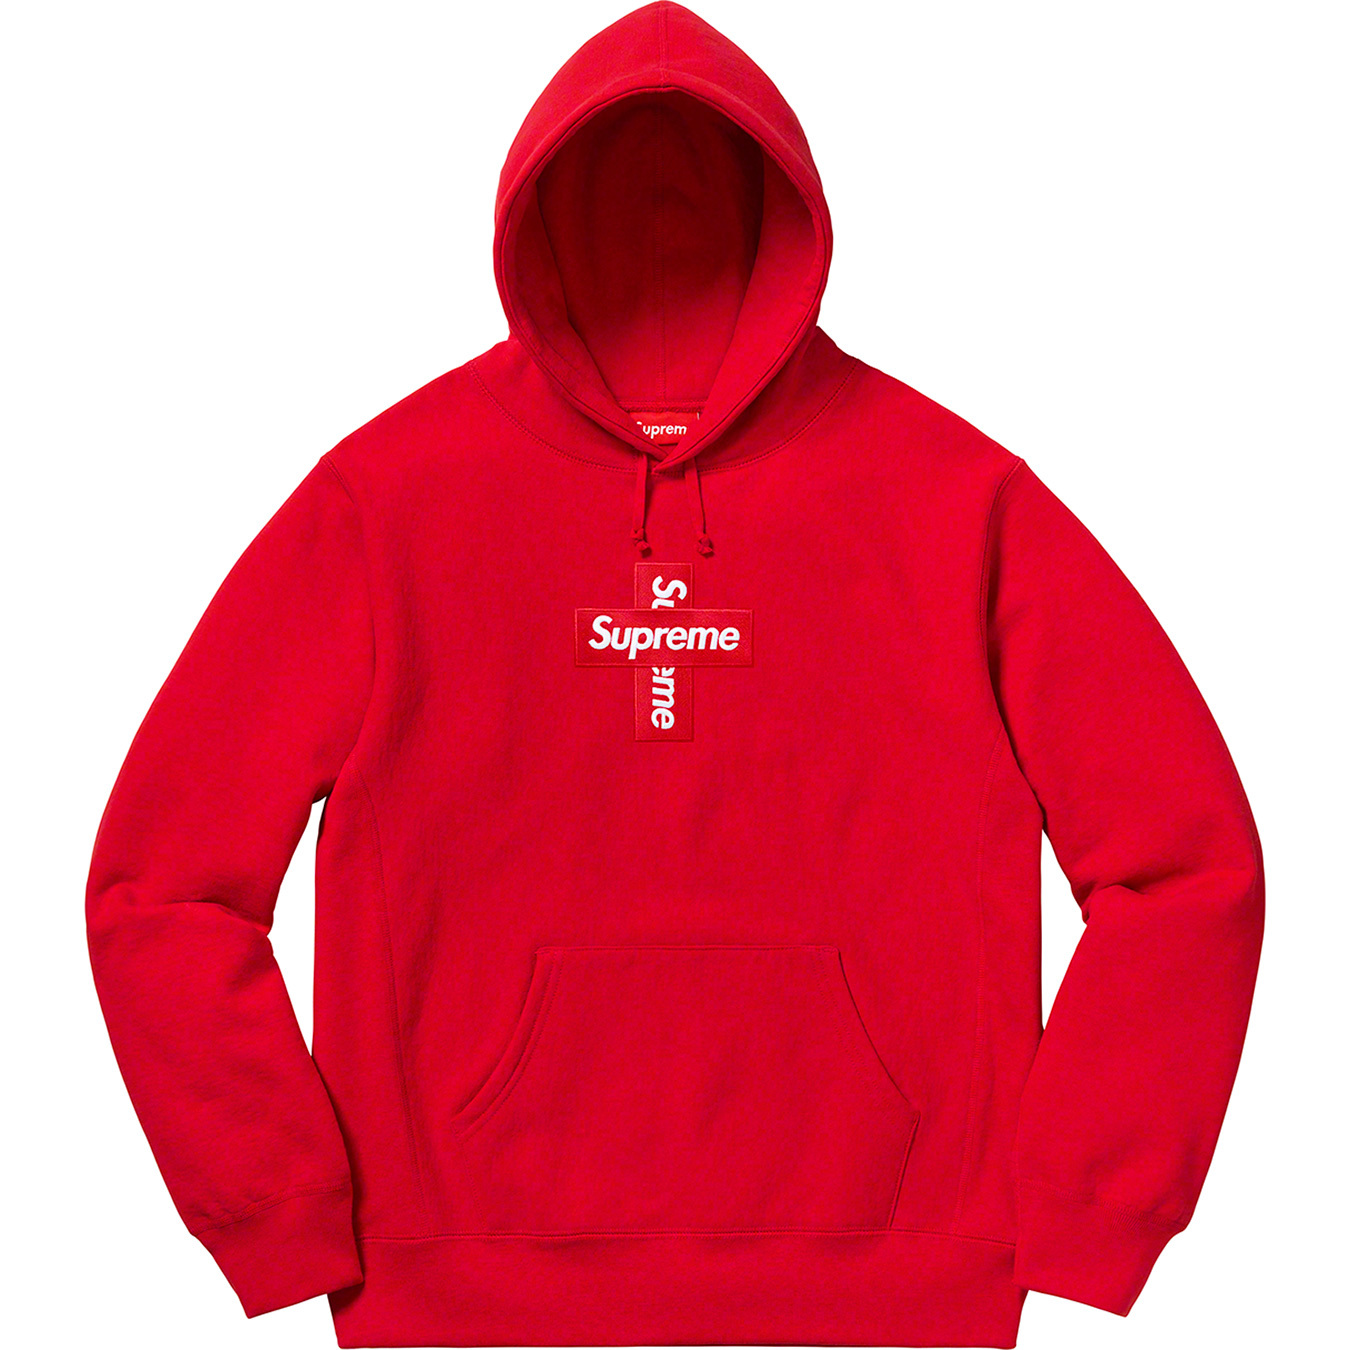 New Supreme Cross Box Logo Hoodie Sweatshirt Red Size X-Large